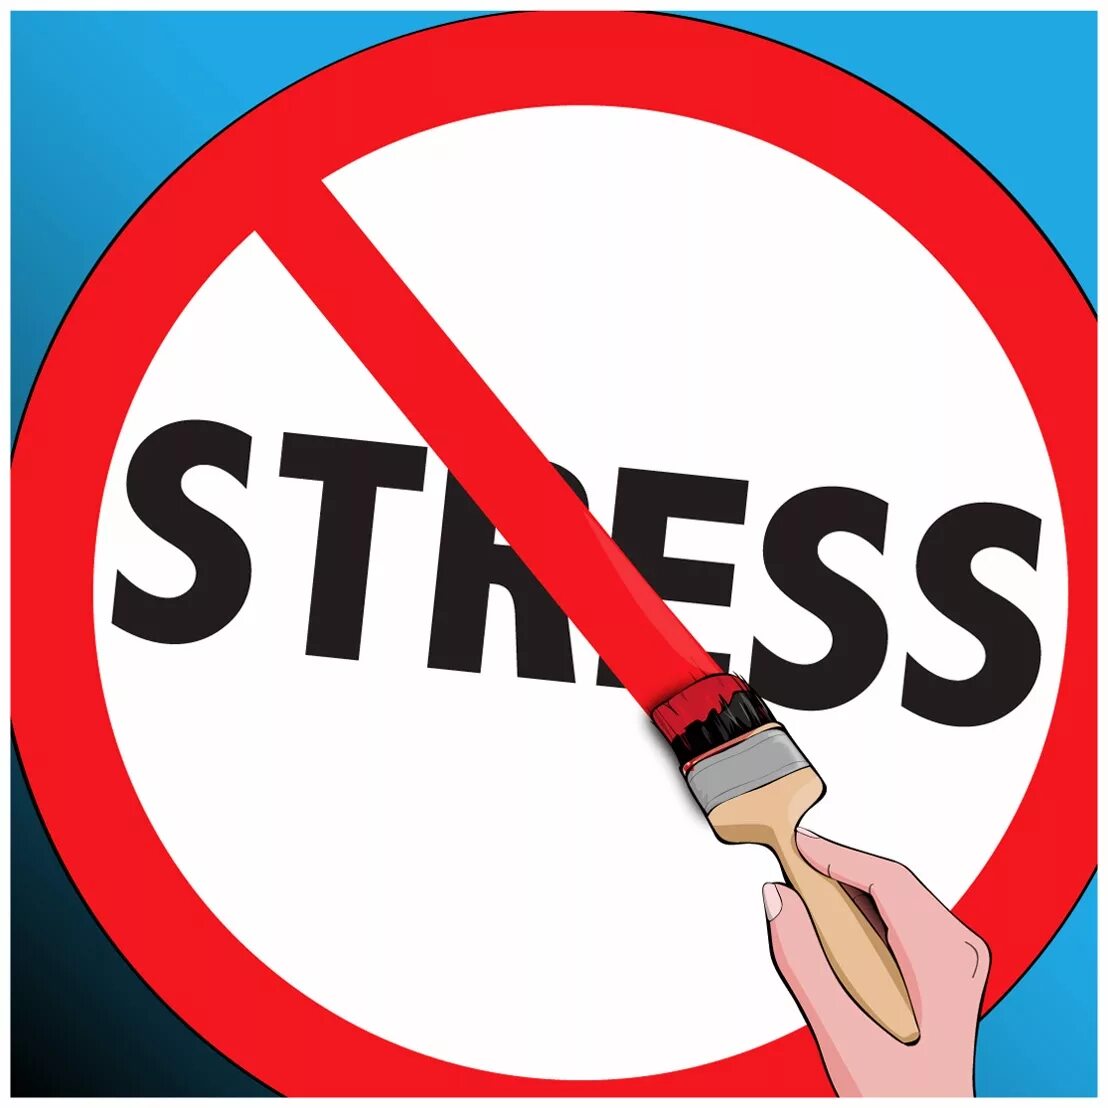 Избегайте стресса рисунок. Борьба со стрессом. Нет стрессу. Стресс борьба со стрессом. Av id